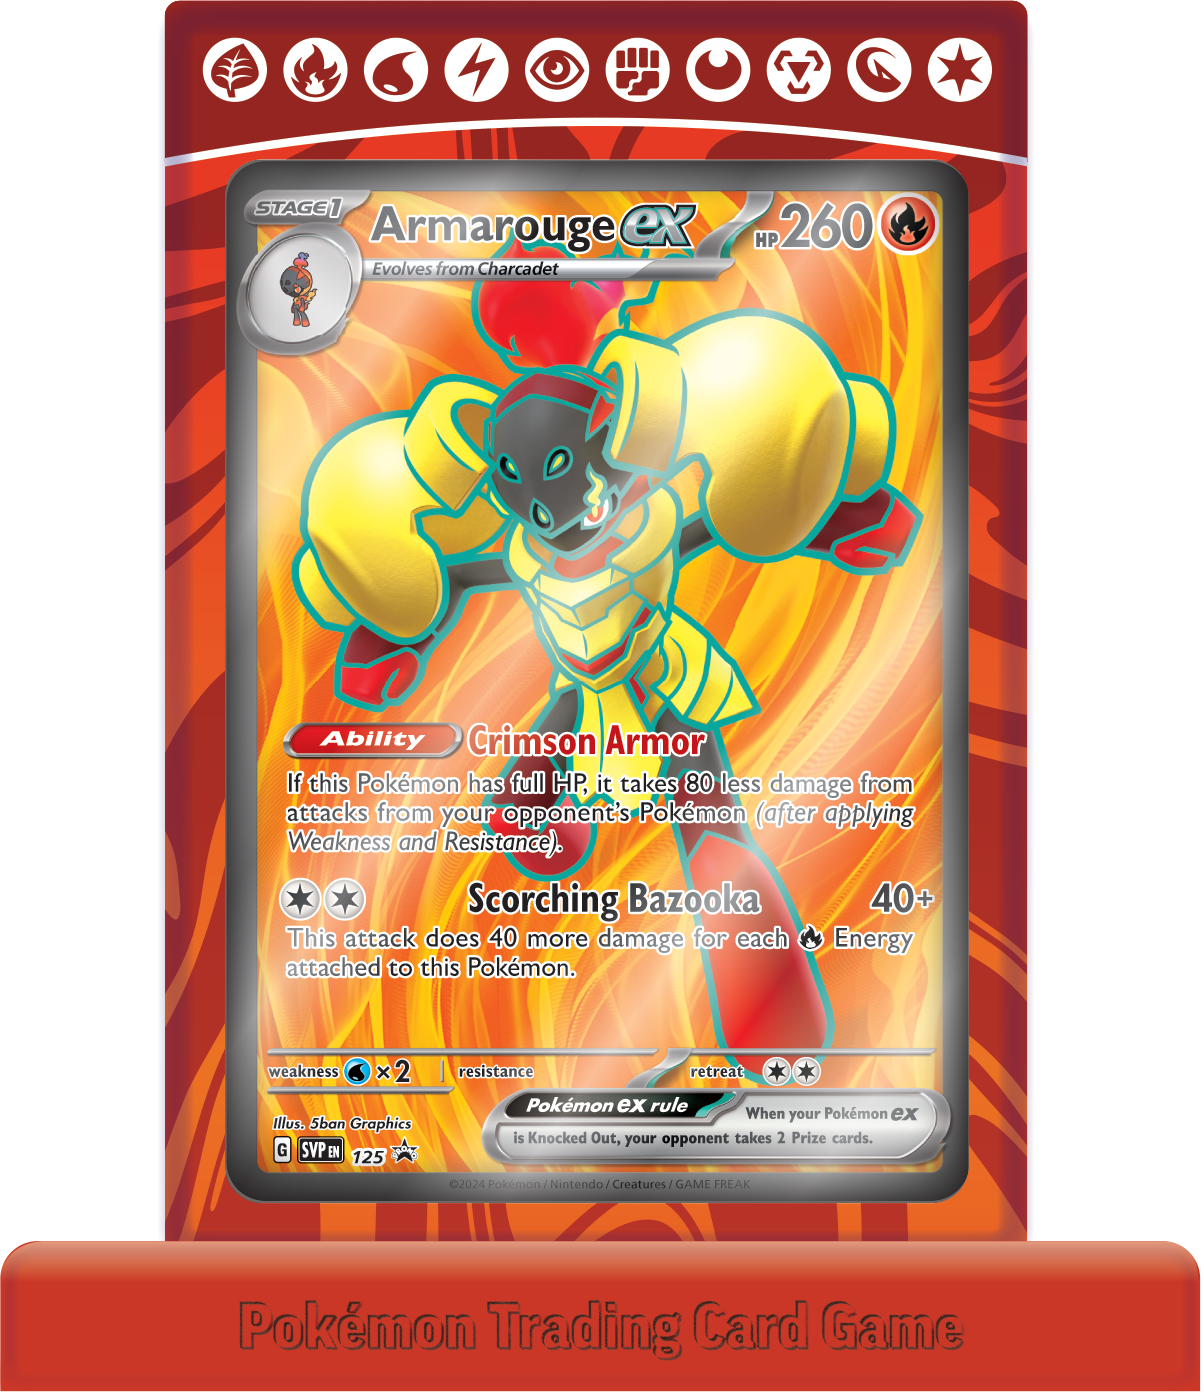 Pokemon Trading Card Game: Armarouge ex Premium Collection